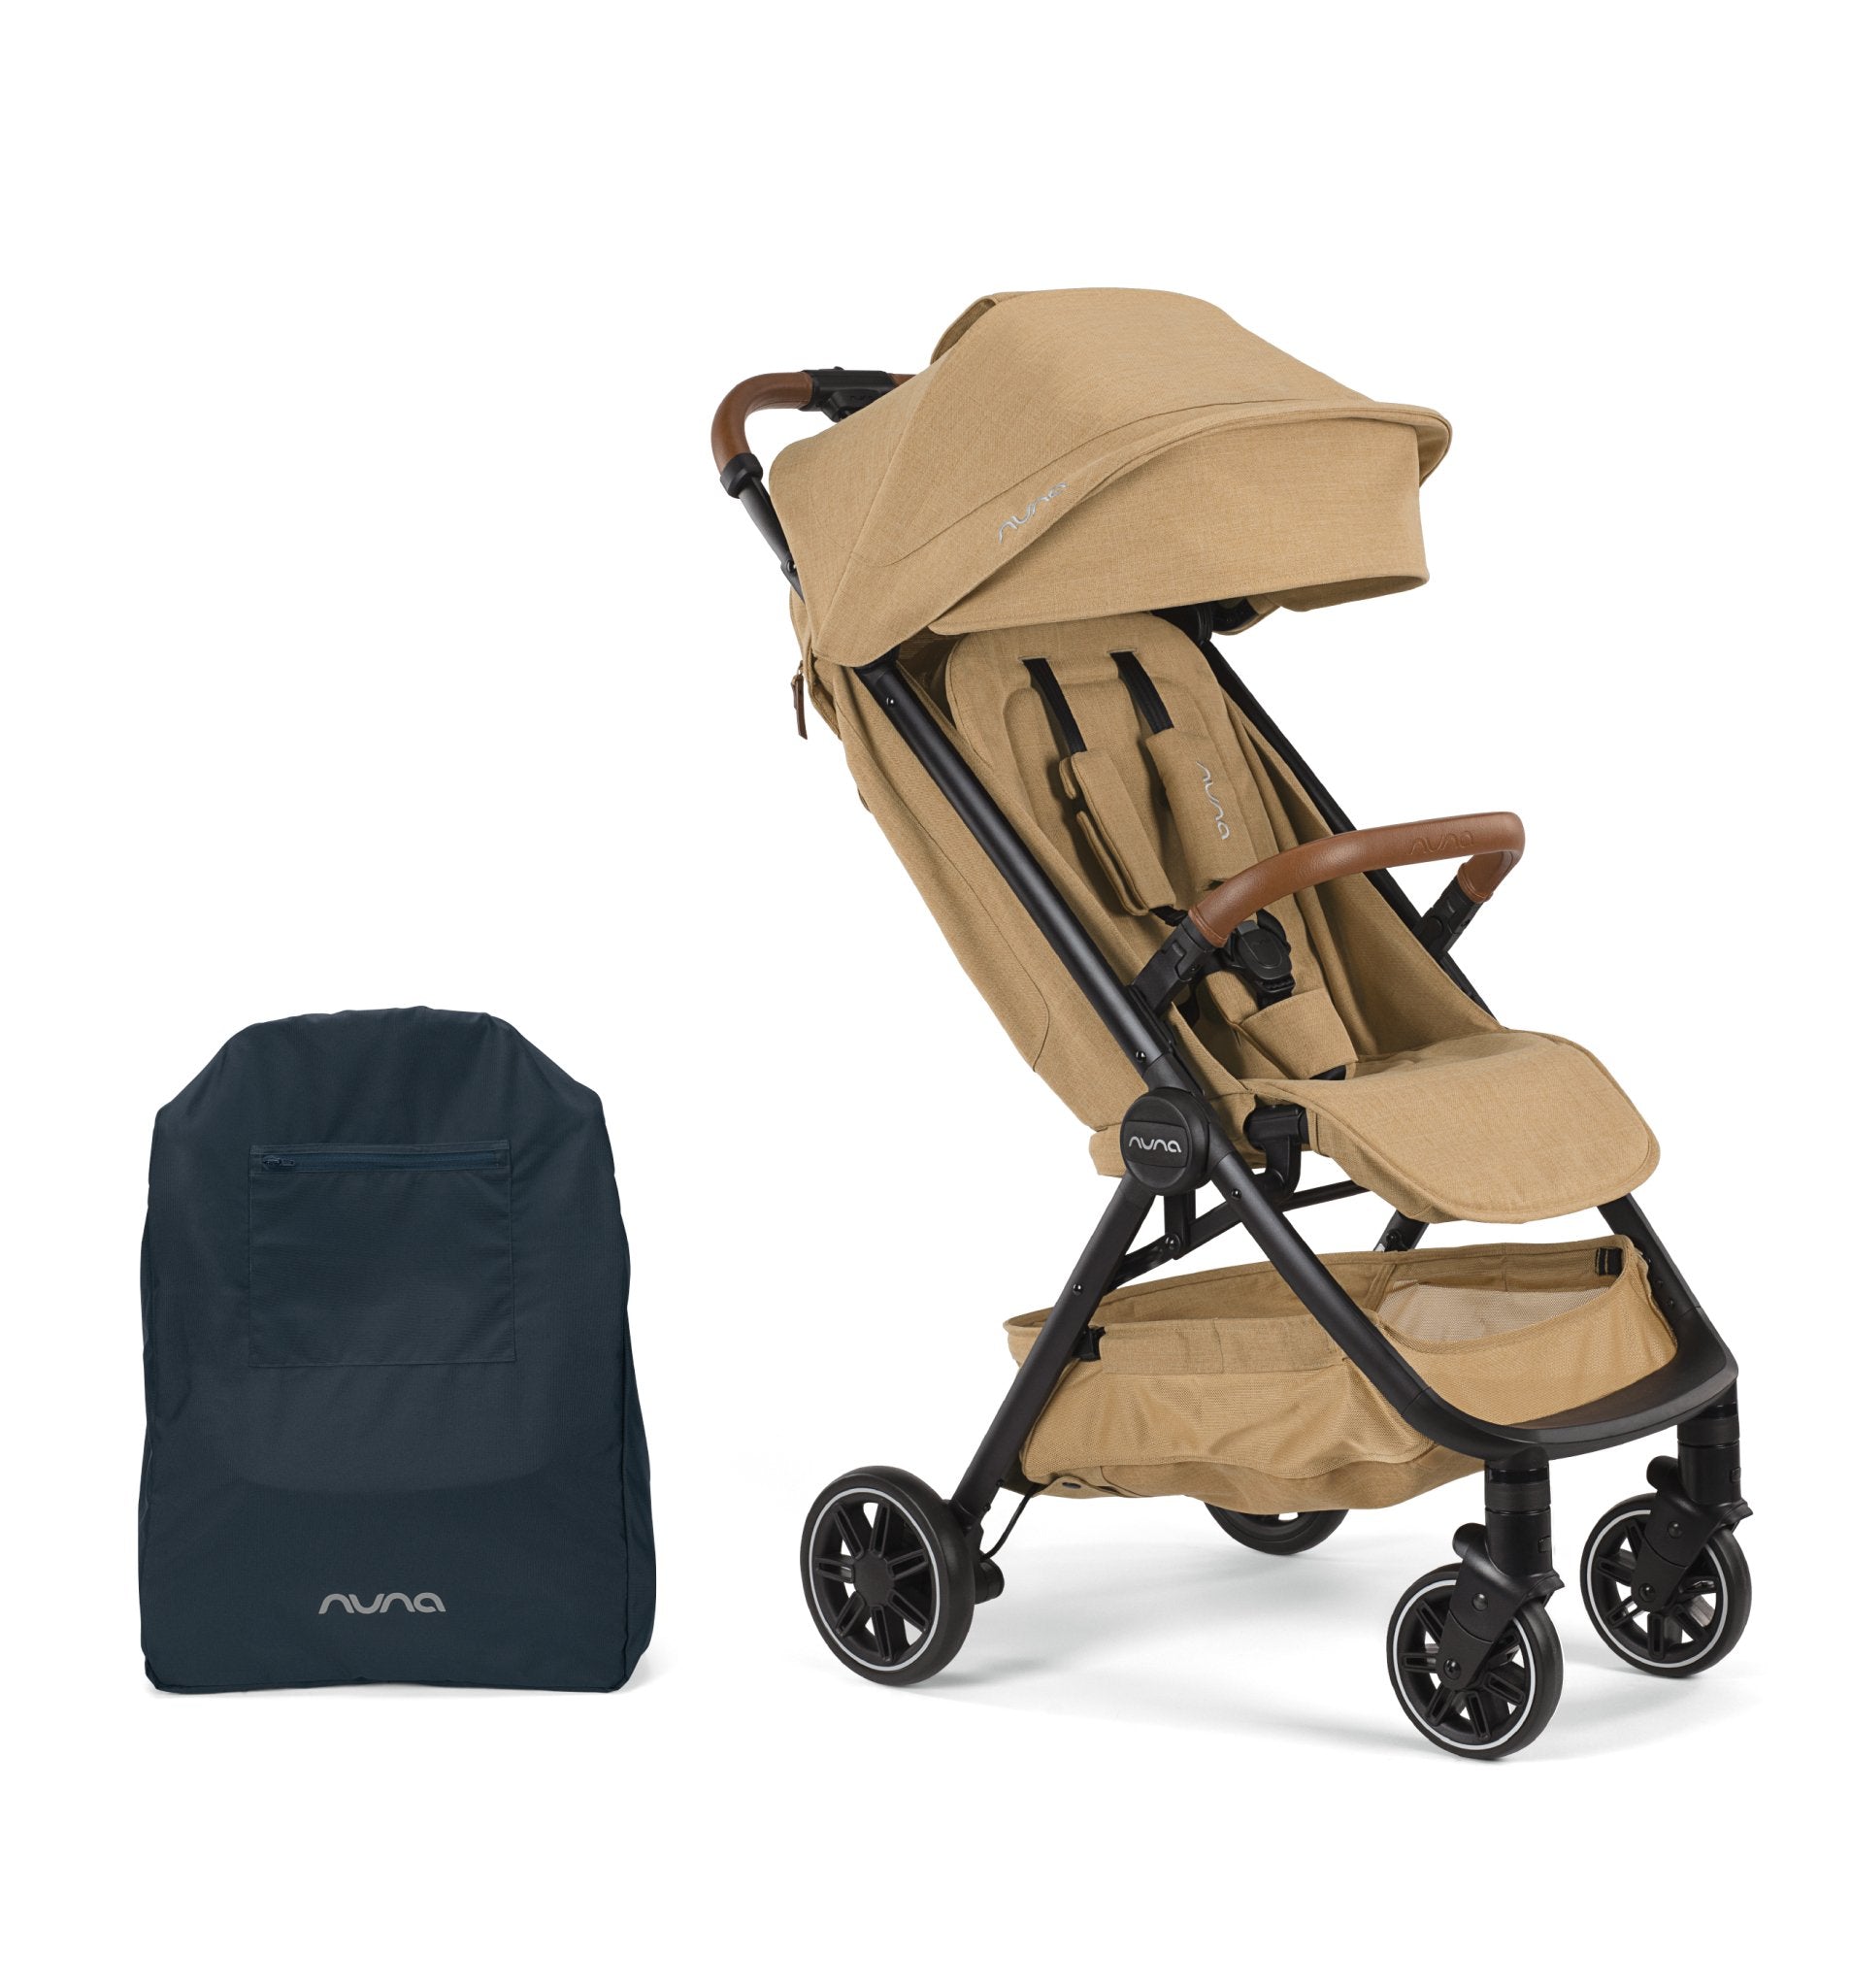 Nuna TRVL Stroller with Travel Bag - ANB Baby -8720246546156$300 - $500